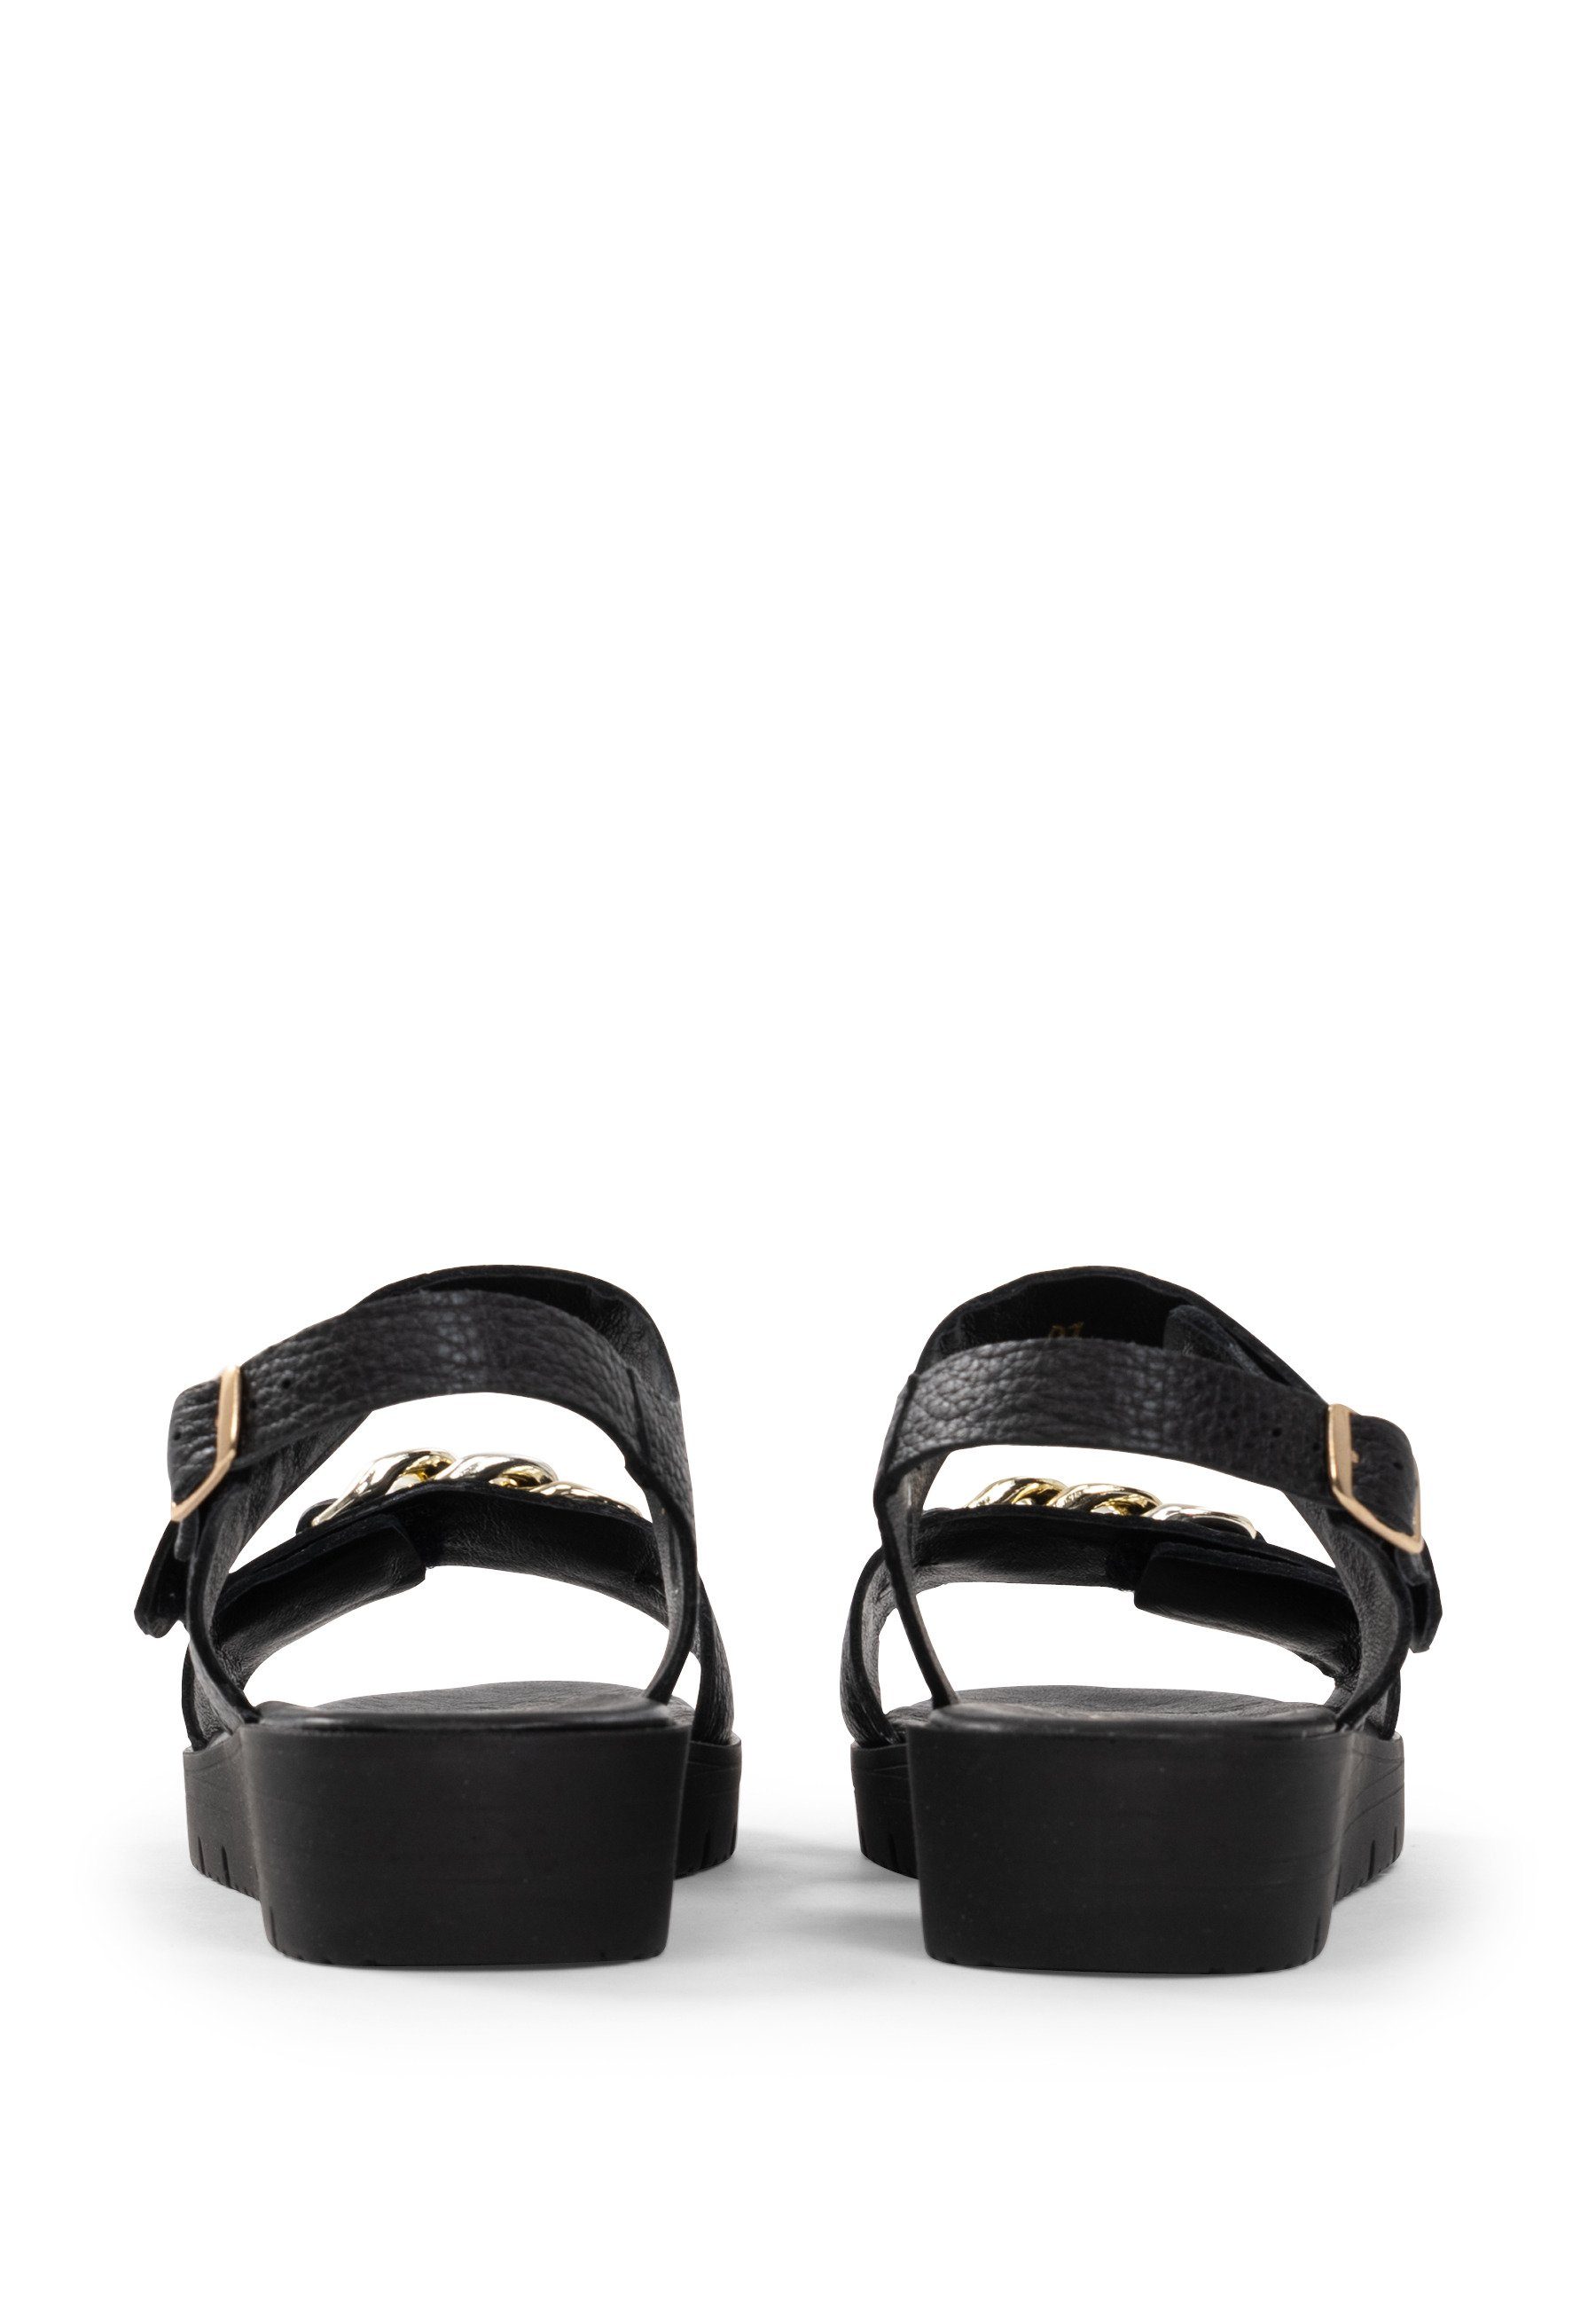 Sandale Damenschuhe schwarz vitaform Hirschleder Sandale